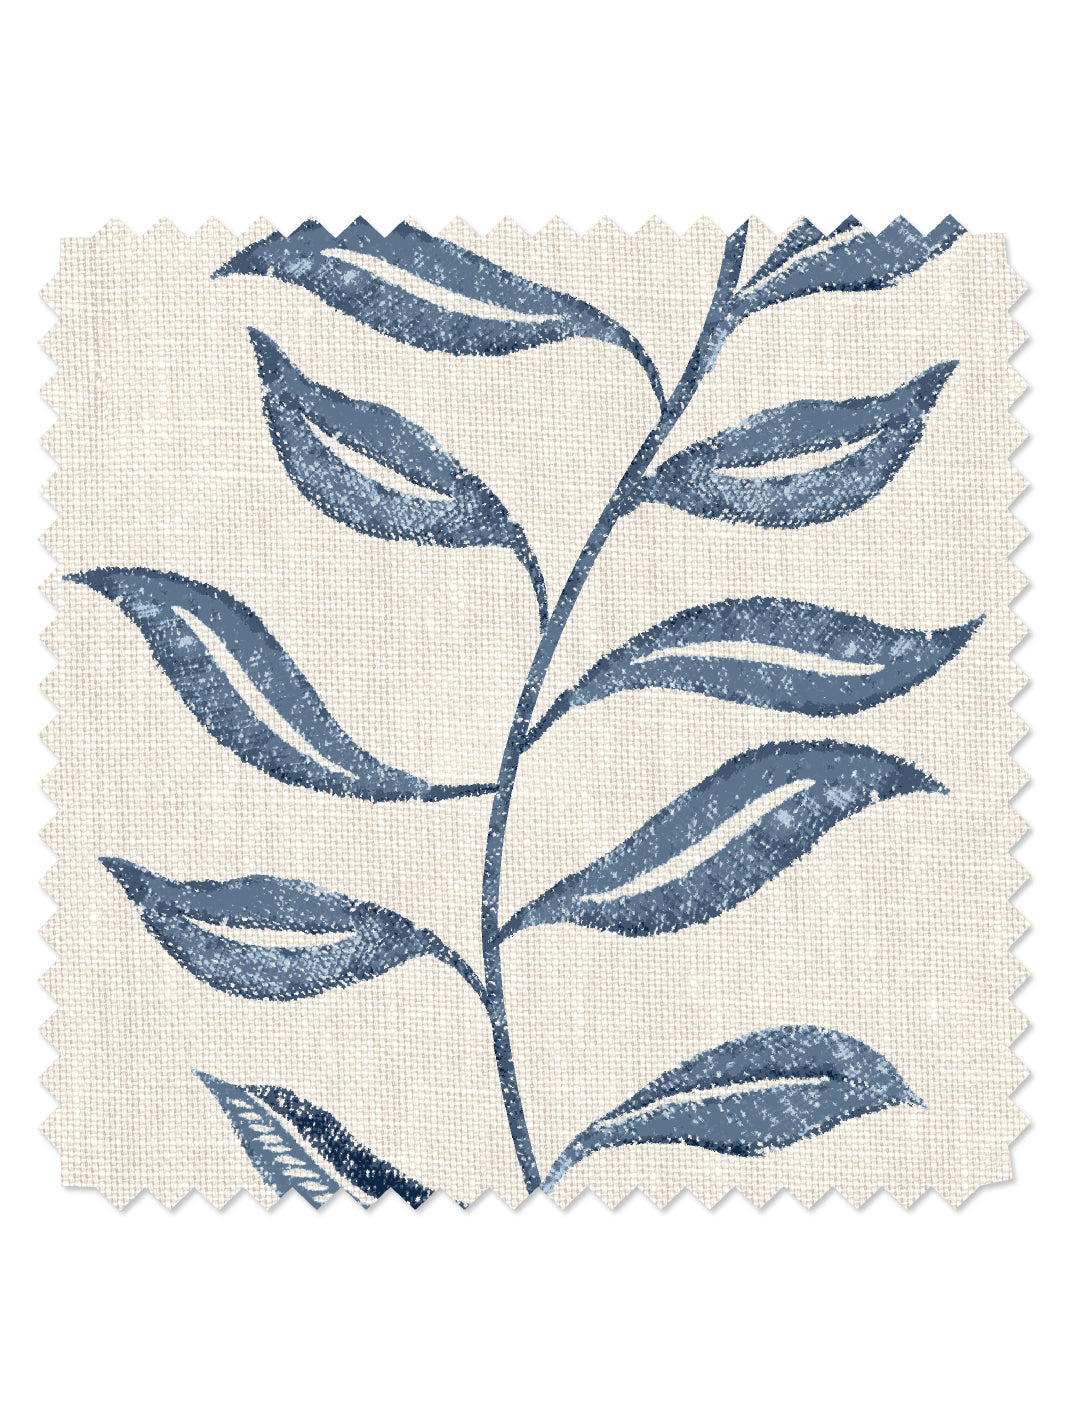 'Seneca' Linen Fabric by Nathan Turner - Darker Blue